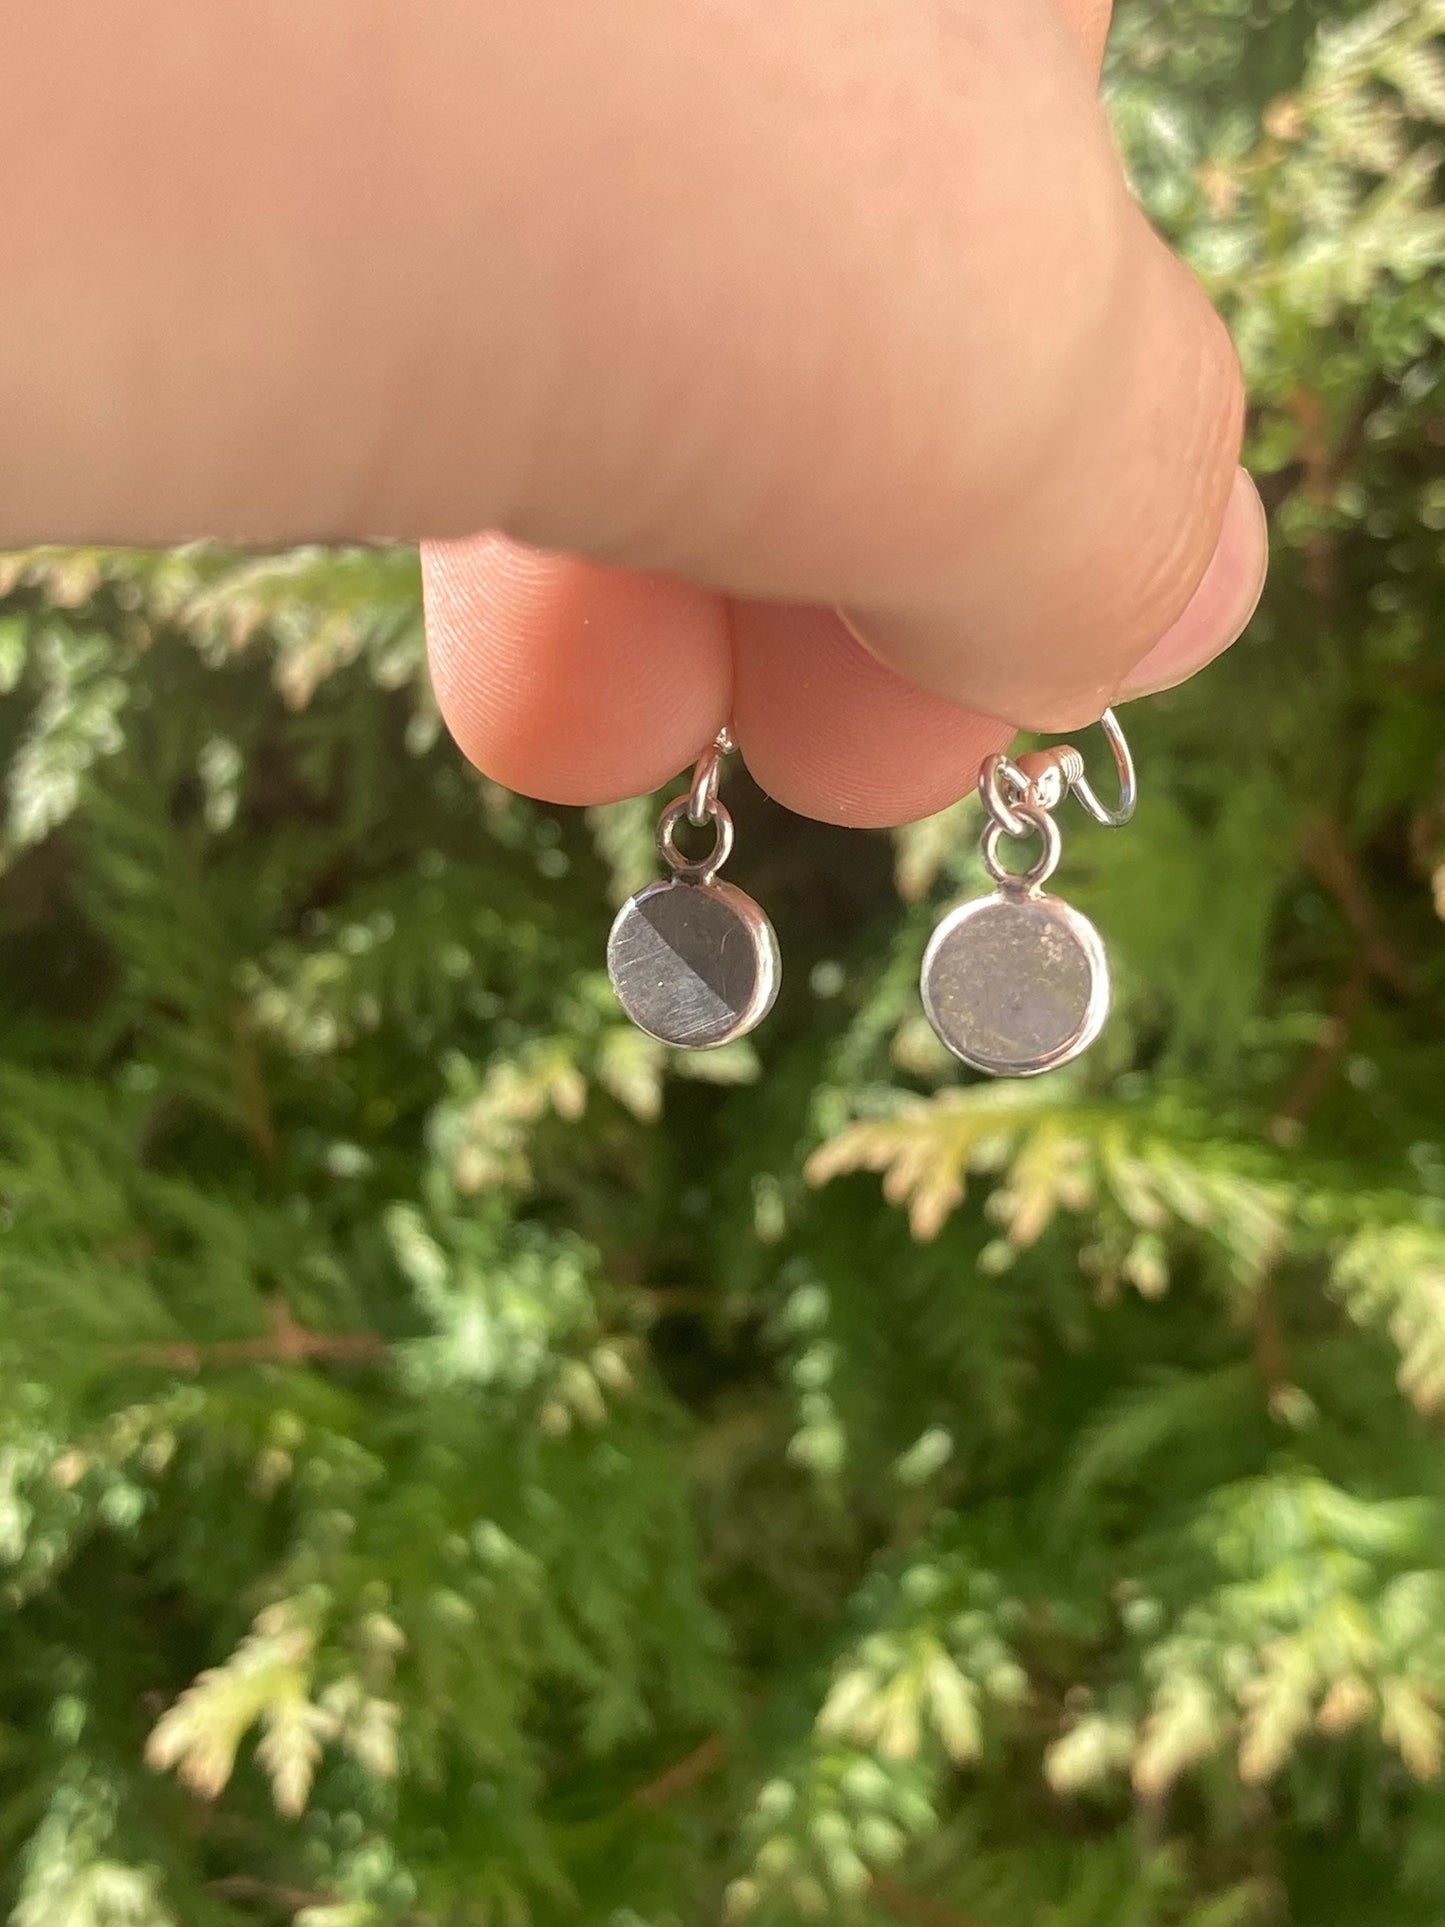 Dainty Sterling Silver Purple Wampum earrings with rubber backing